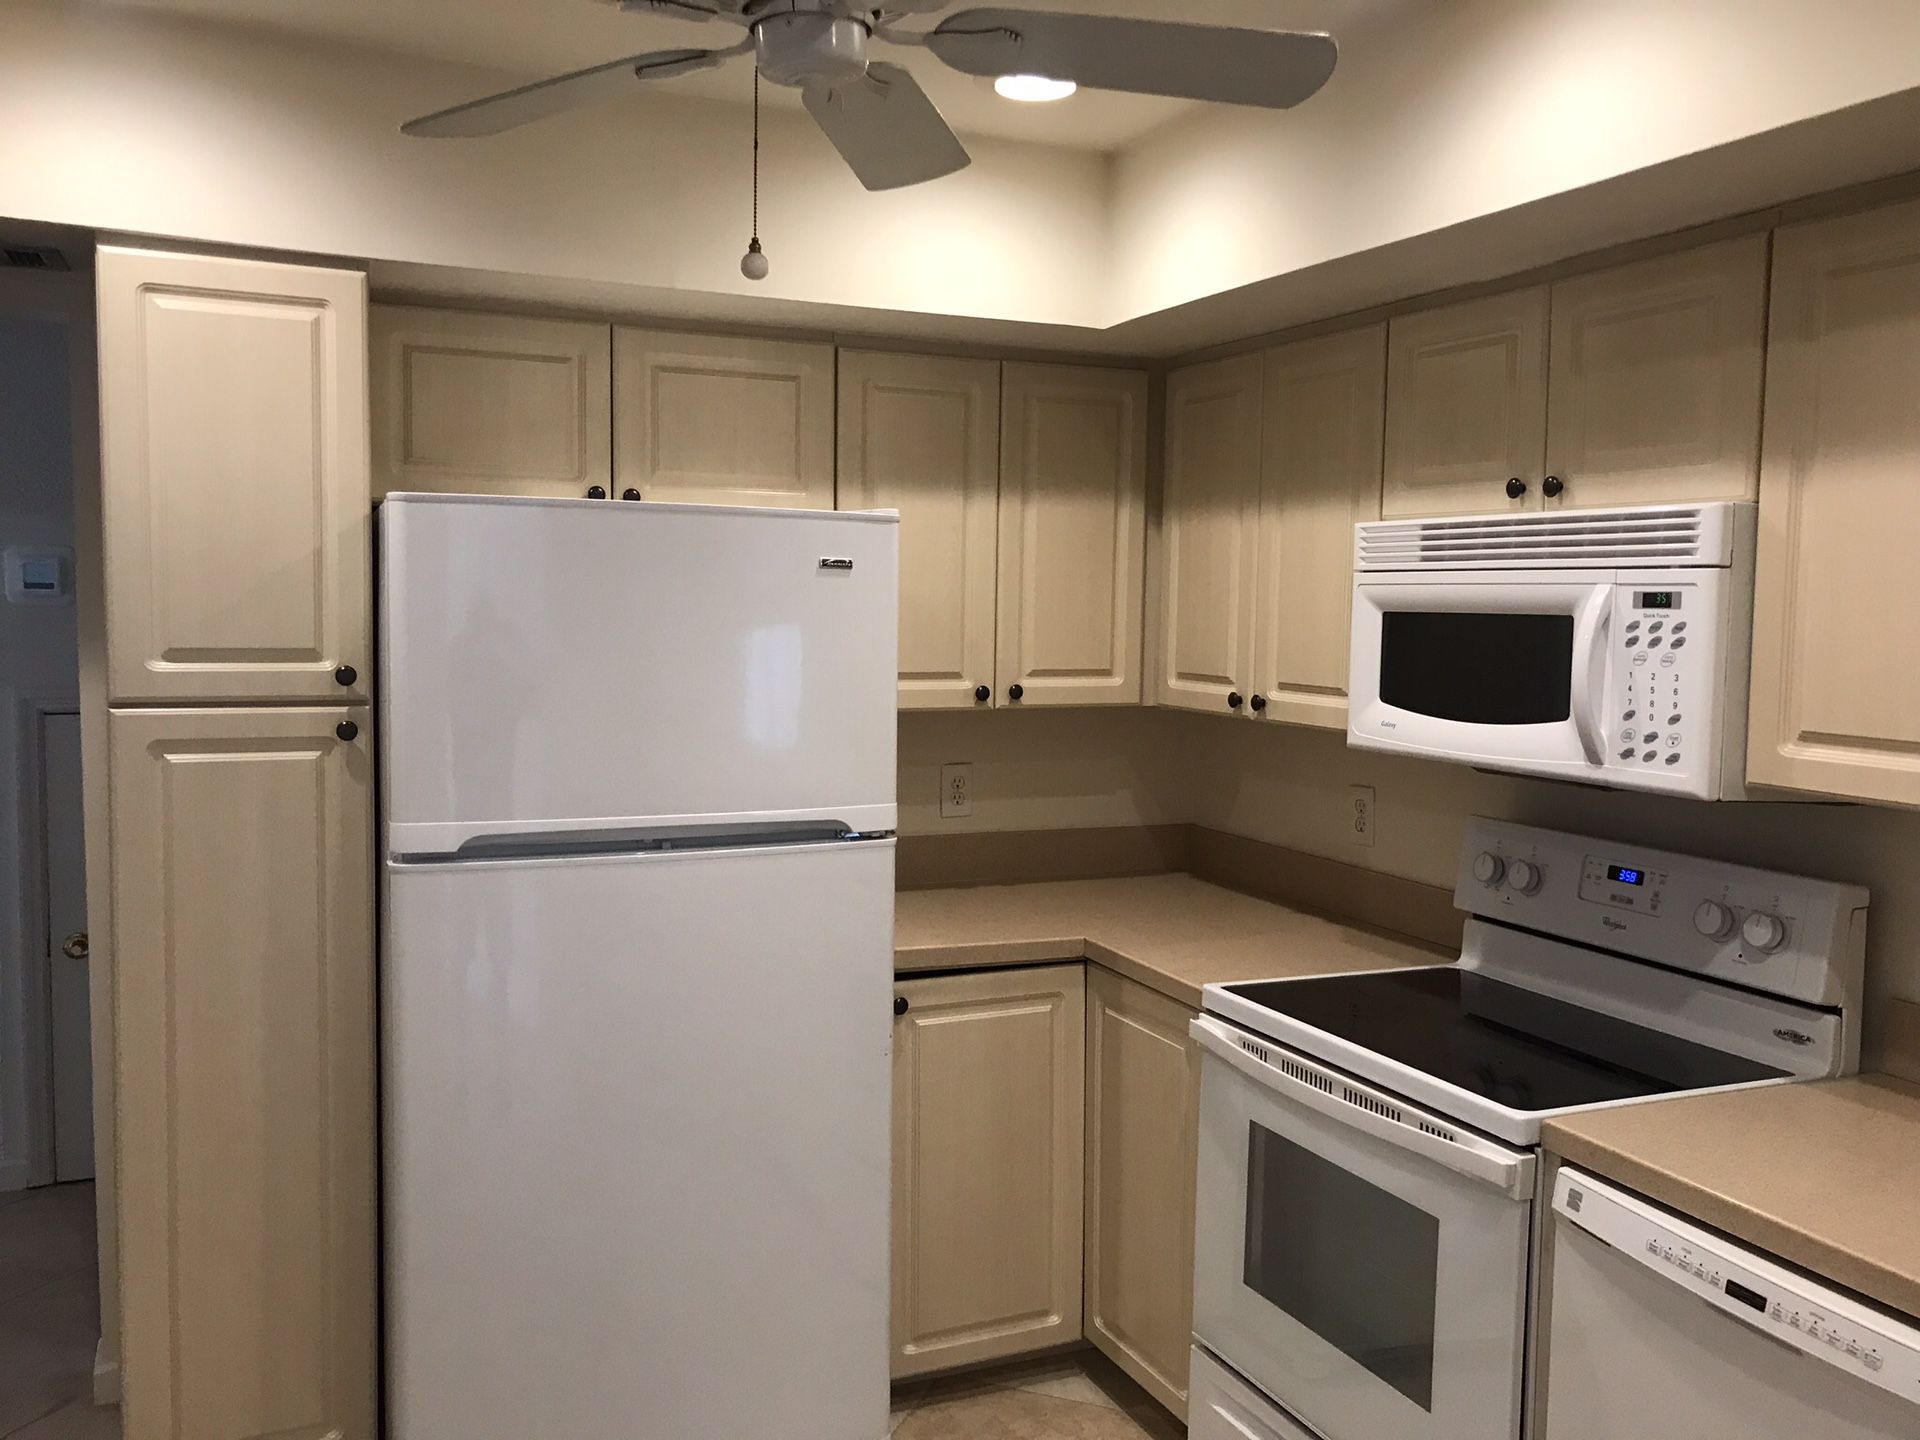 Full kitchen fridge, MW, Range,dishwasher all functional